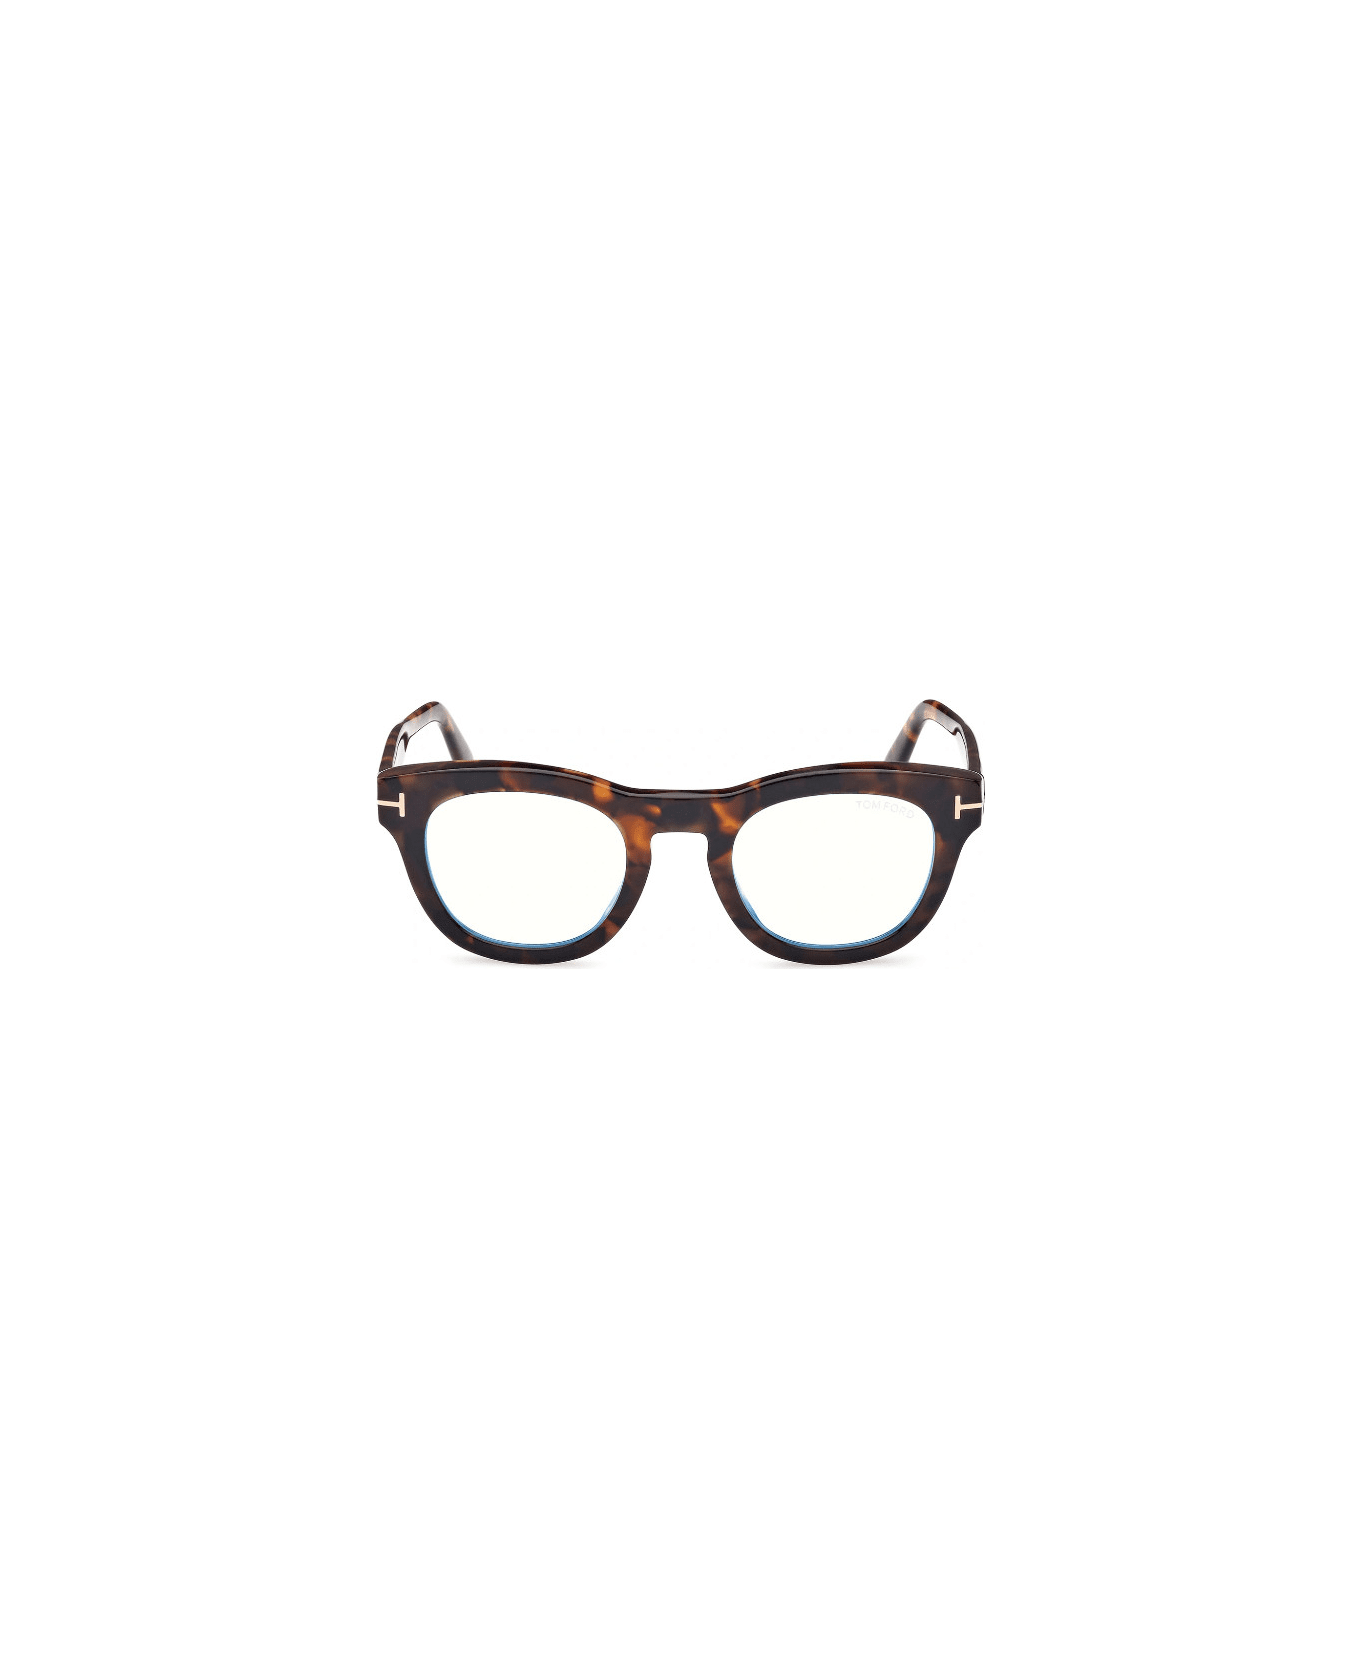 Tom Ford Eyewear TF5873 052 Glasses